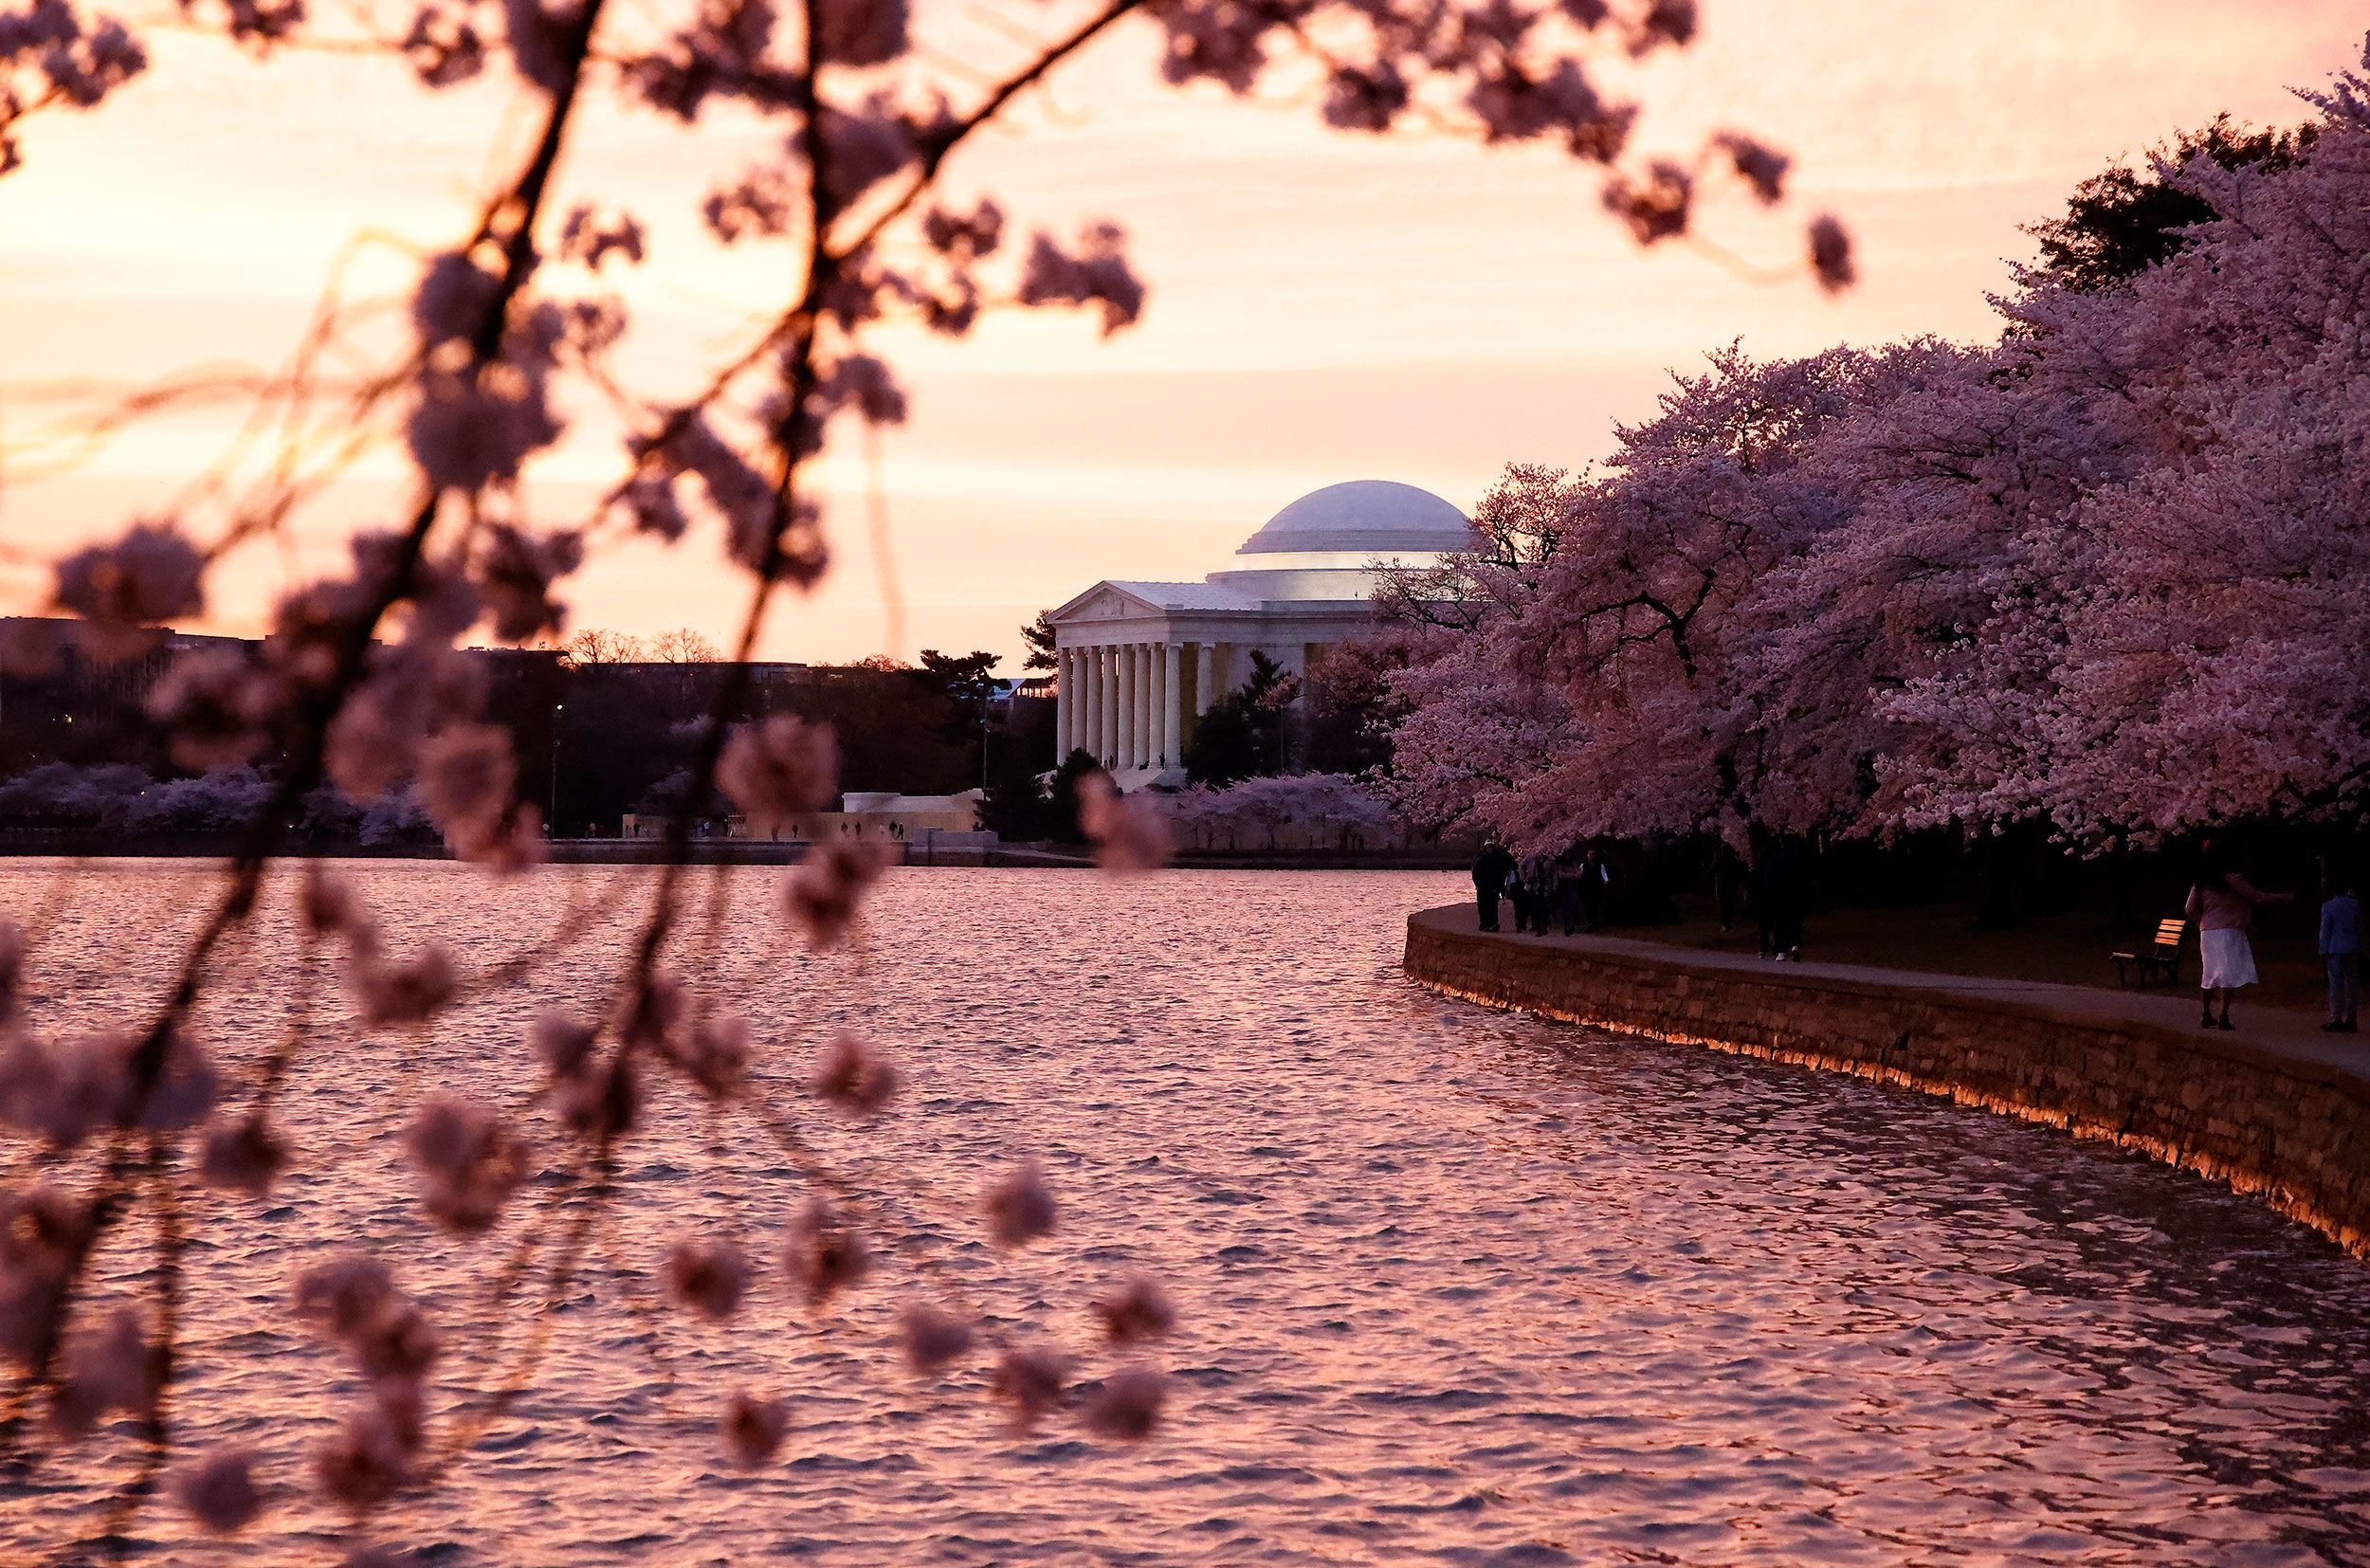 washington cherry blossoms